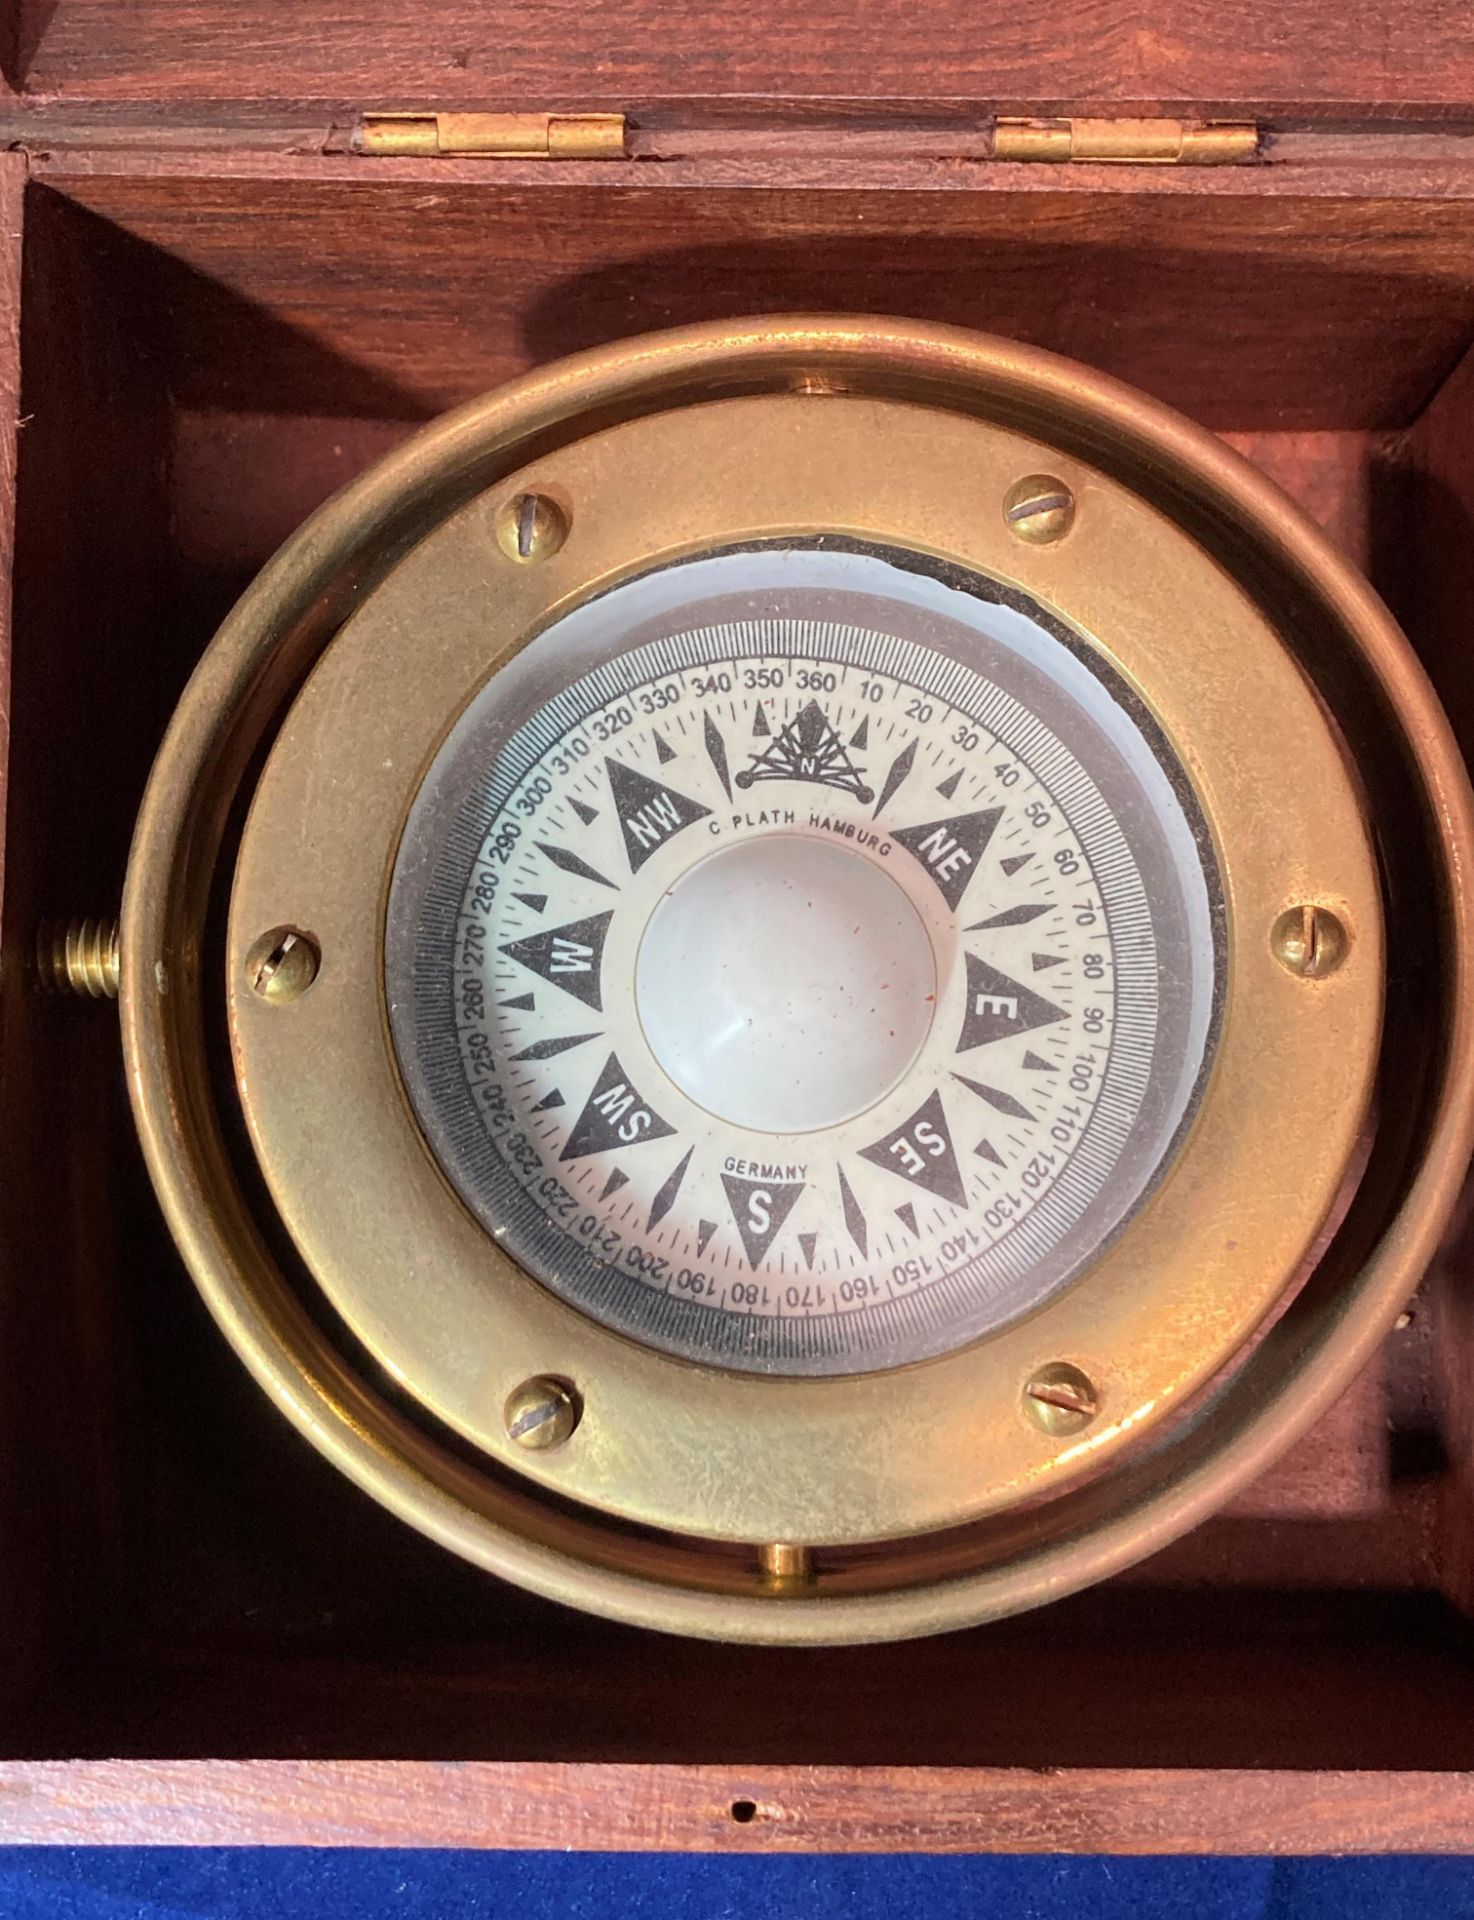 C Plath Hamburg Germany brass compass in walnut case (Saleroom location: S2 counter 3) - Image 3 of 4